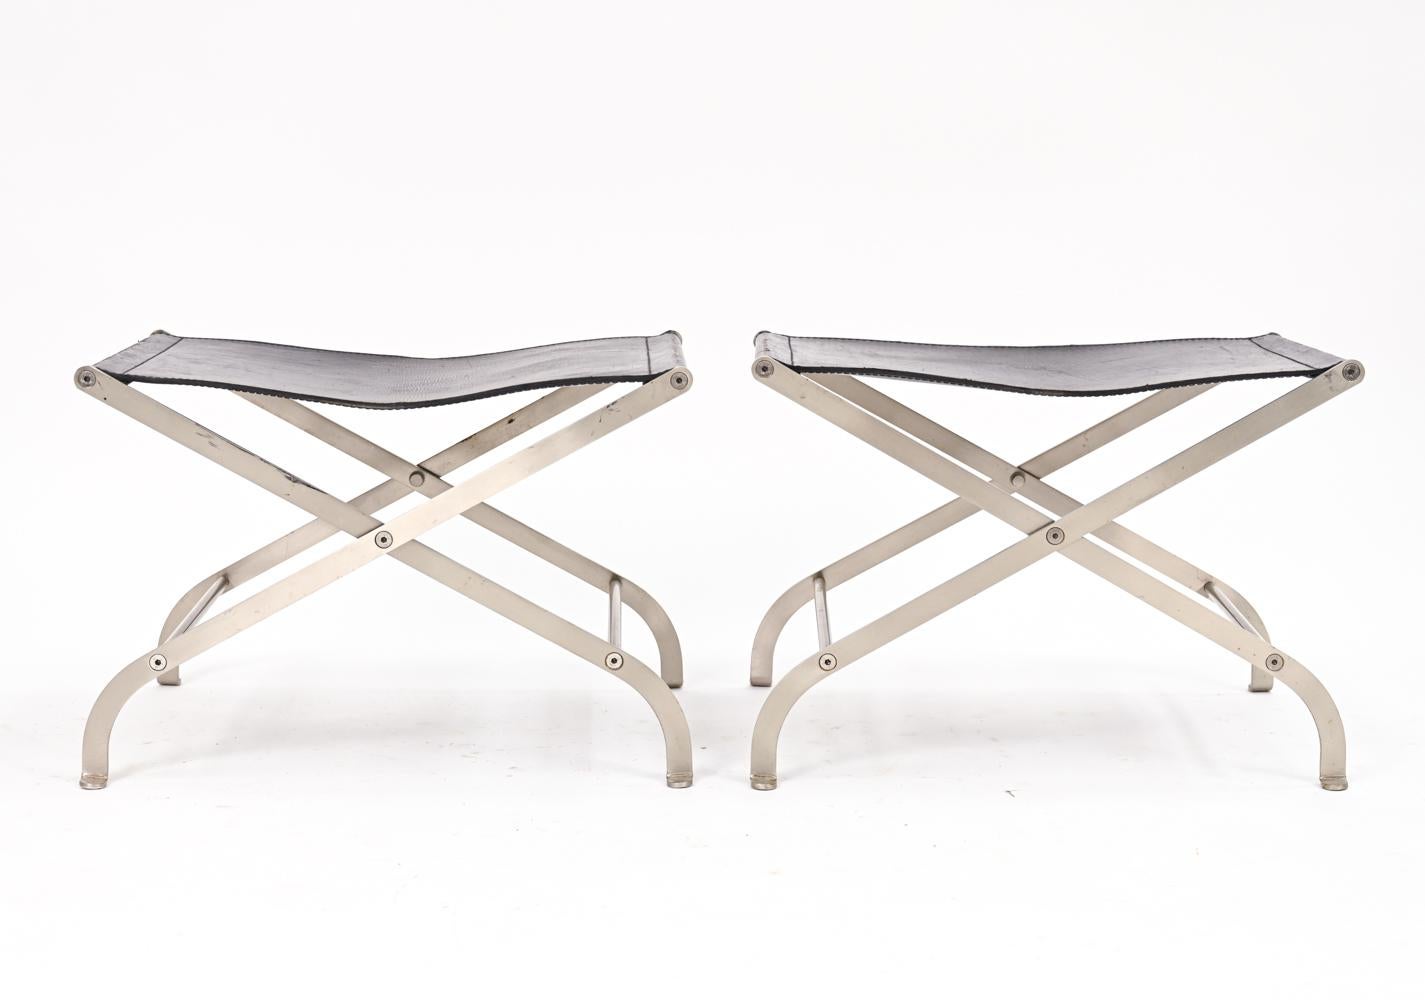 A stylish pair of modern Italian folding stools designed by Antonio Citterio for Flexform, c. 1997. The 